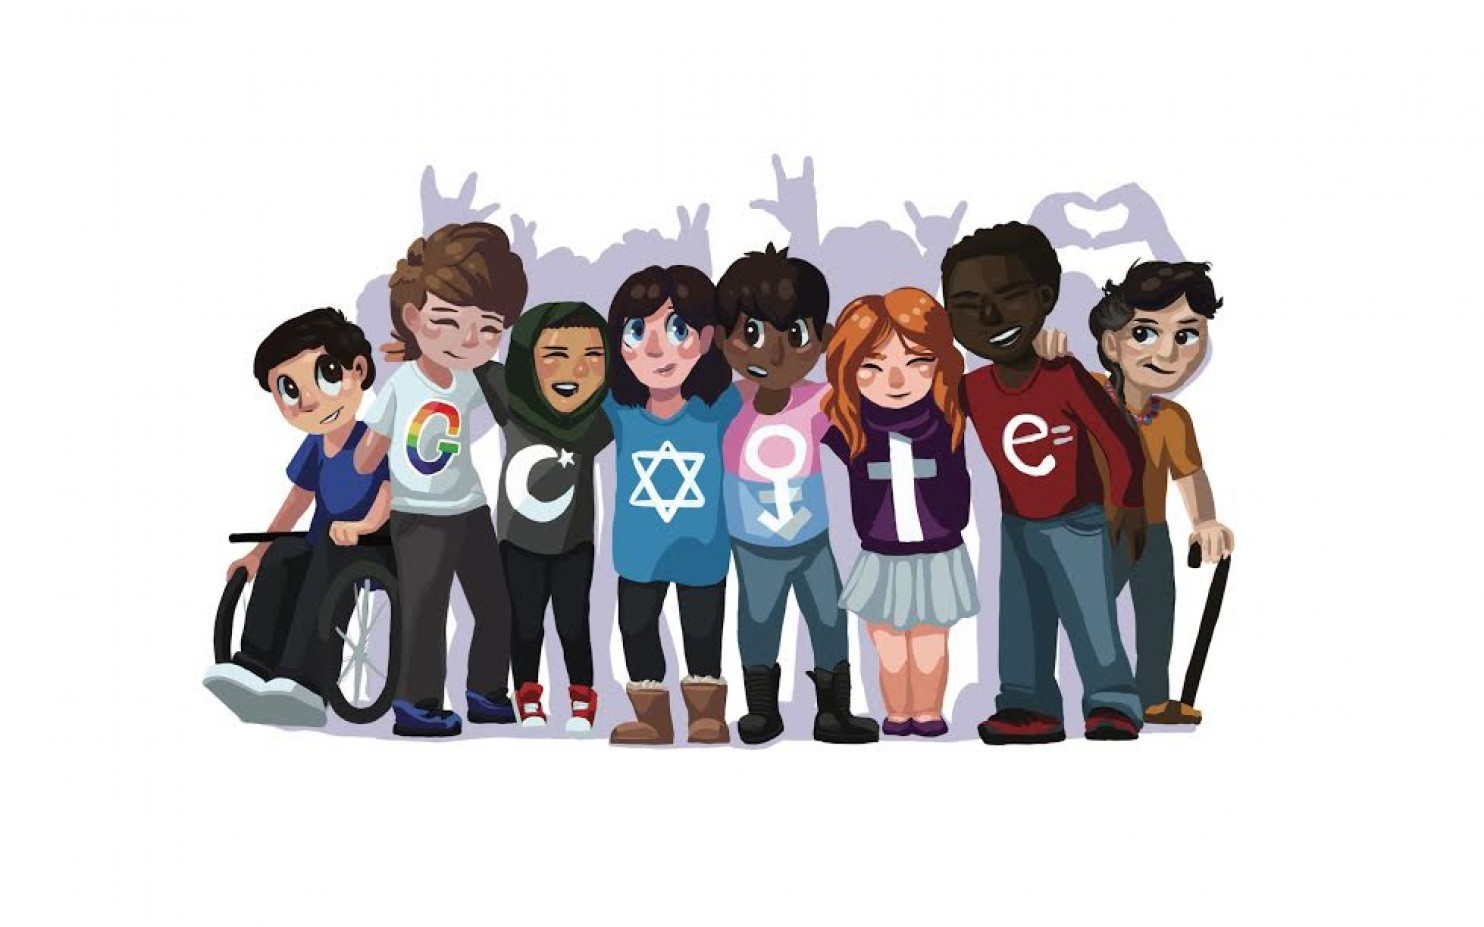 Today's google doodle is Student Job, Winner Imagines a World of Universal Acceptance - Google, Doodle, Tolerance